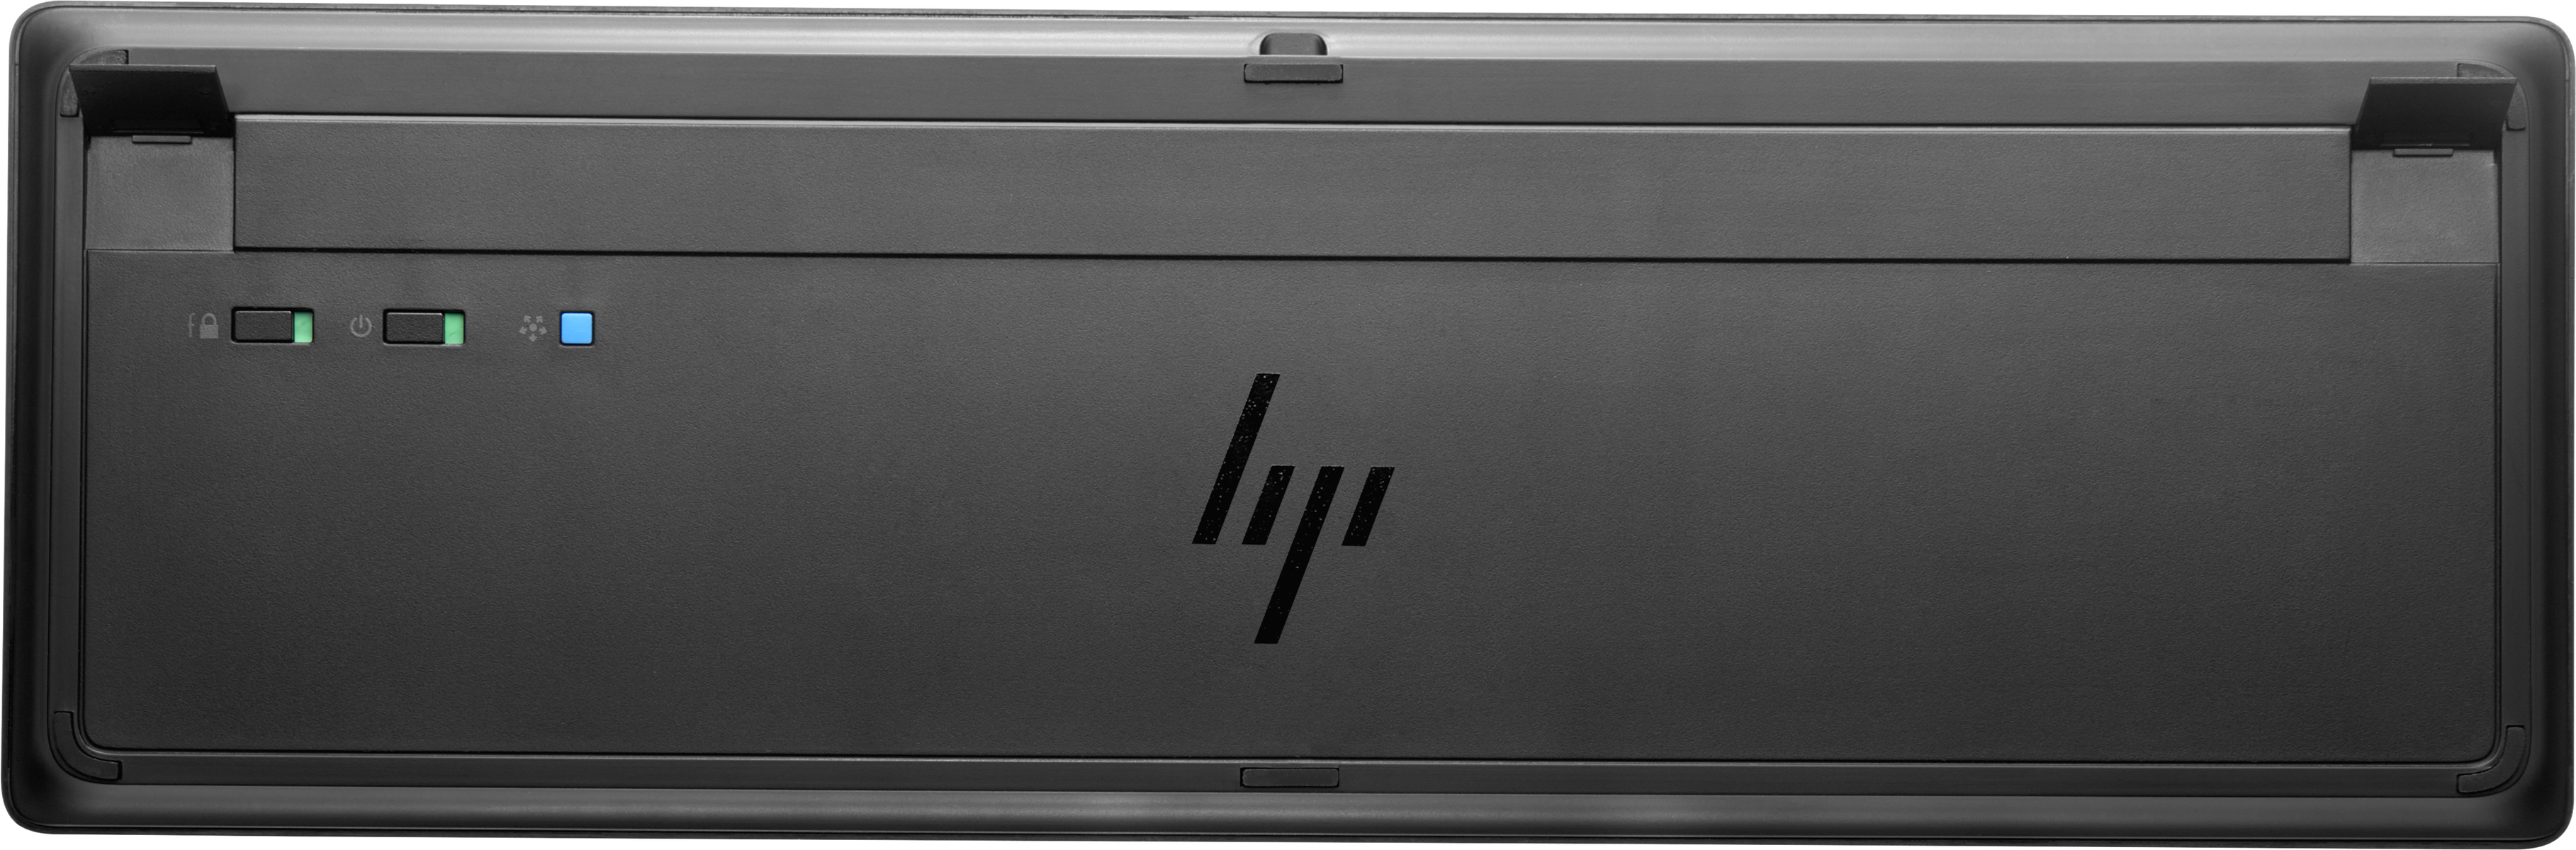 Premium HP Keyboard, Wireless Tastatur